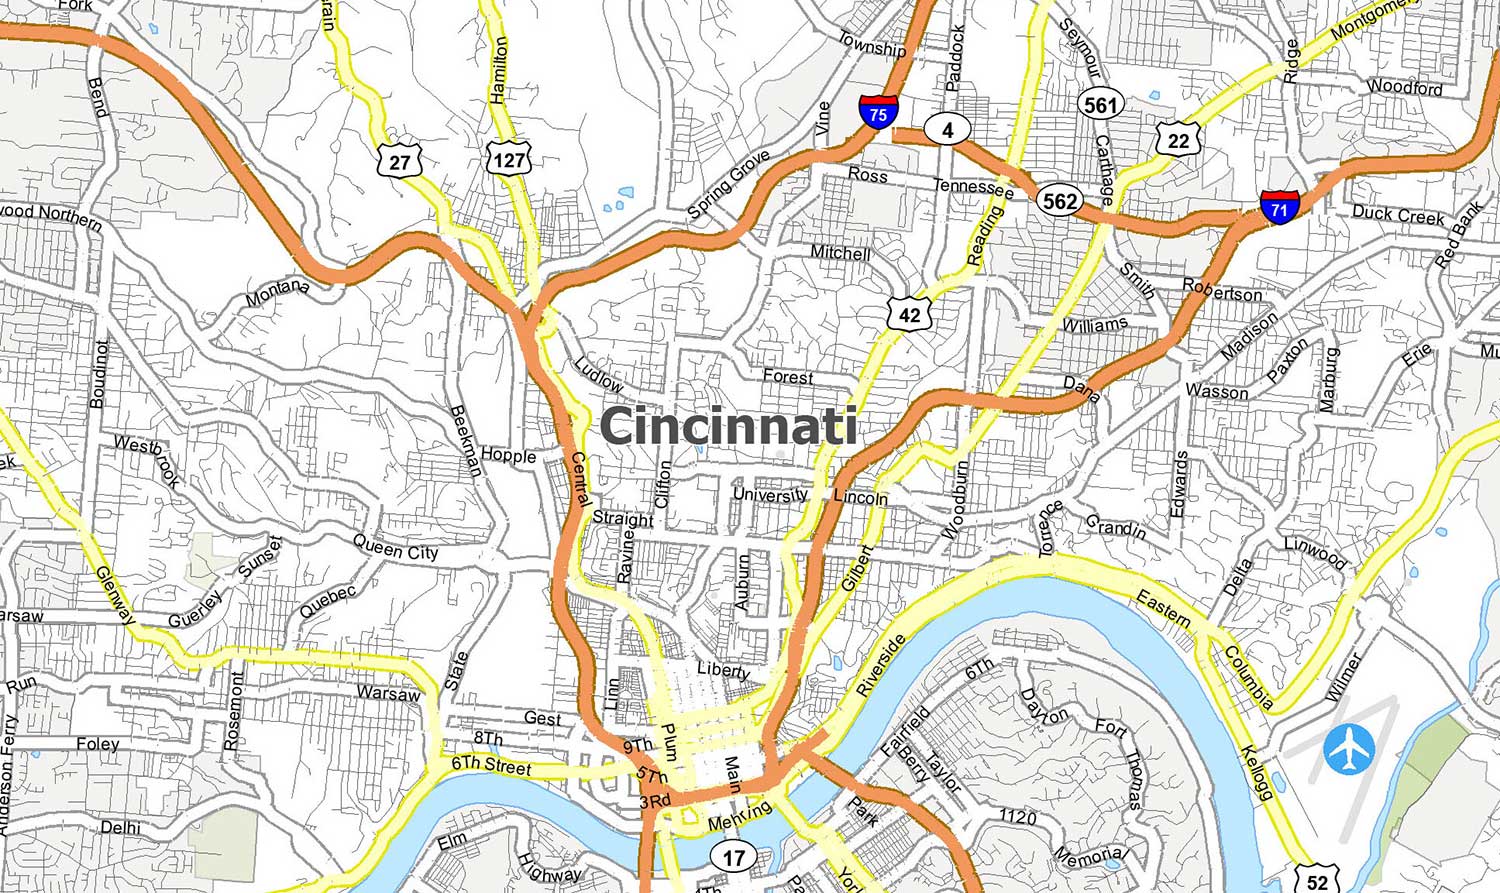 ohio state stadium interactive map